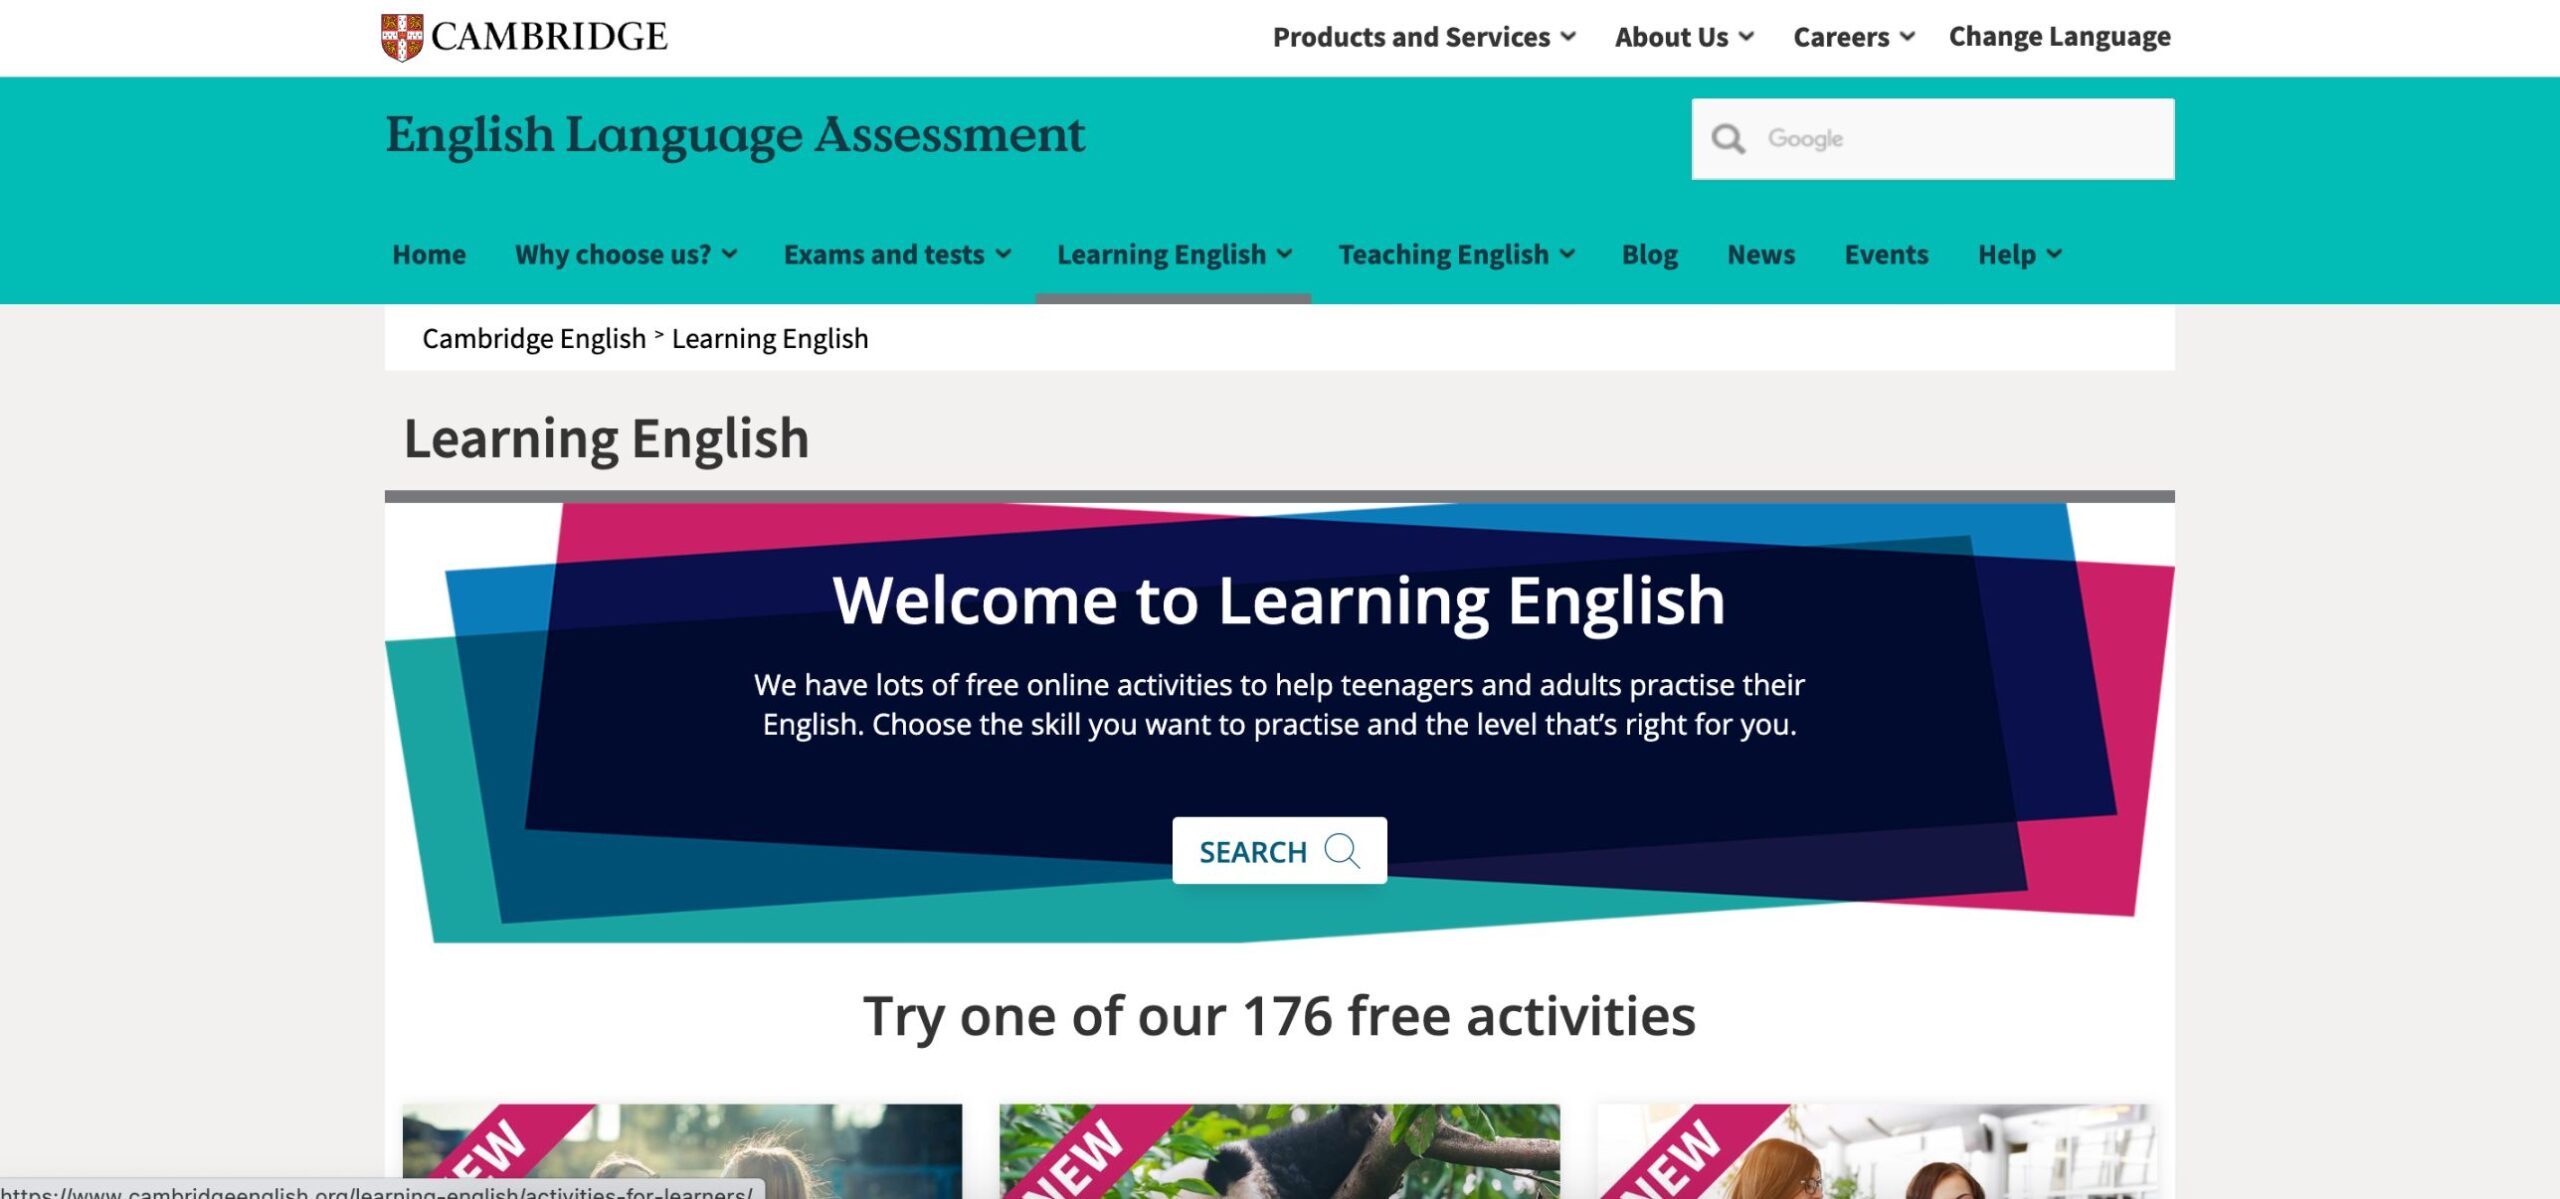 Cambridge | English Language Assessment | Learning English